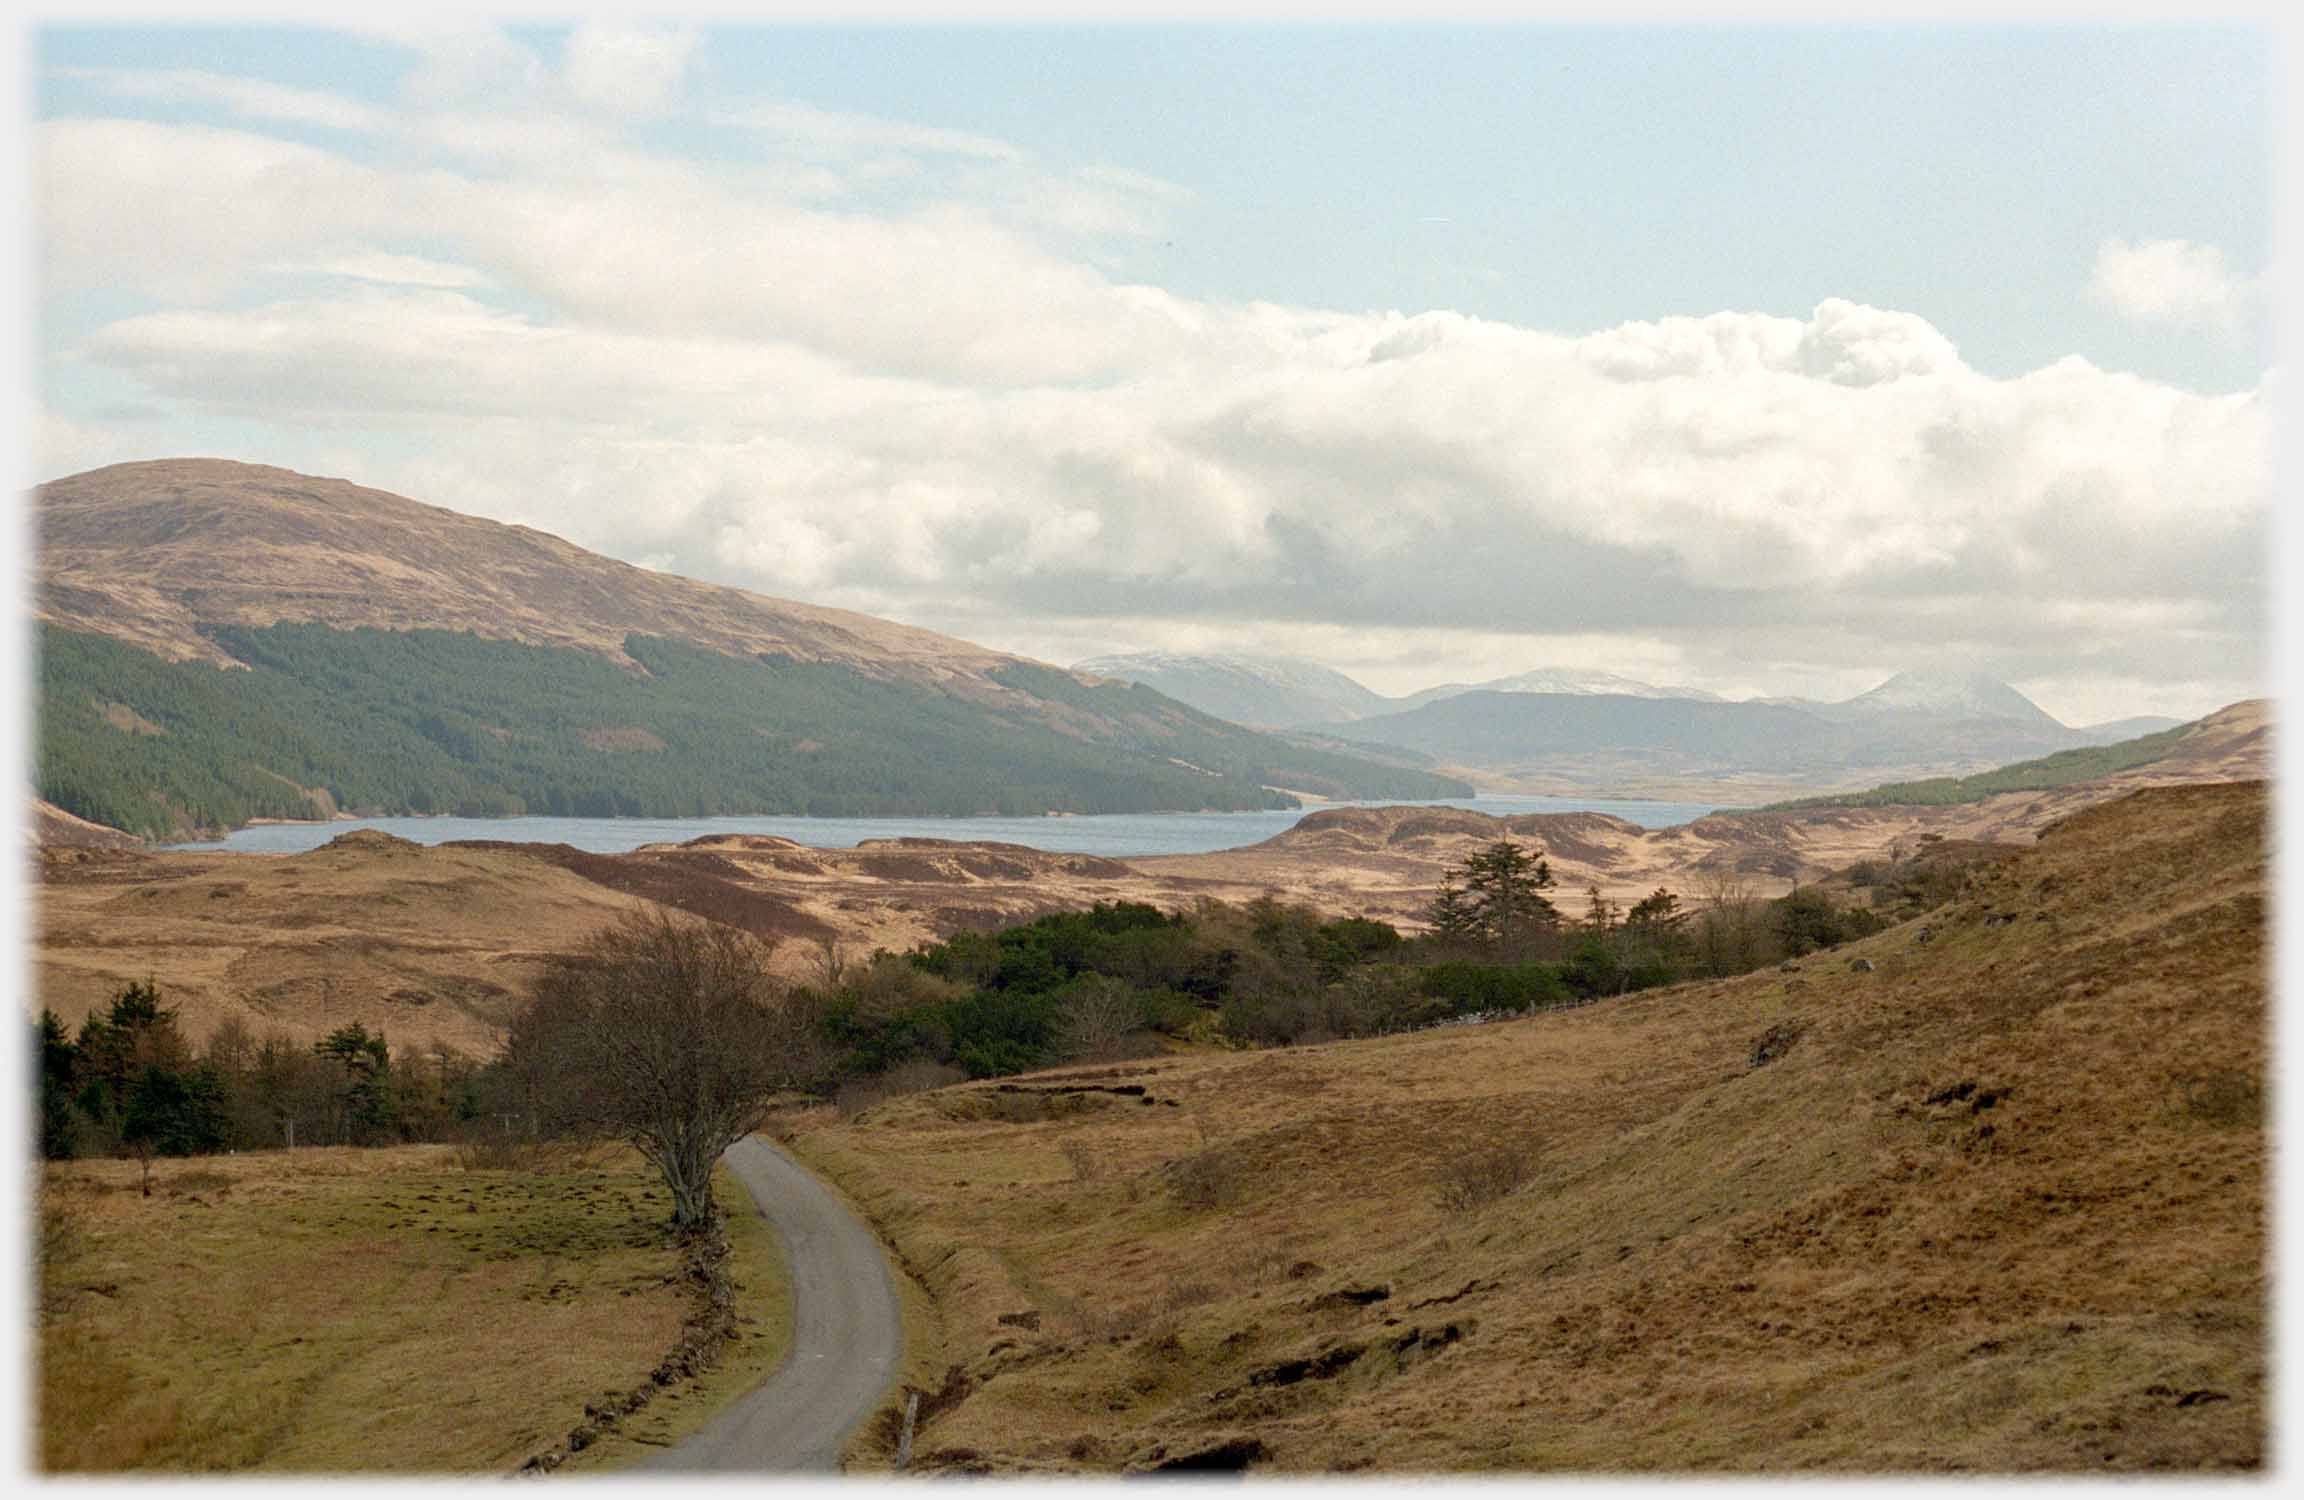 Small road running towards loch and hills.